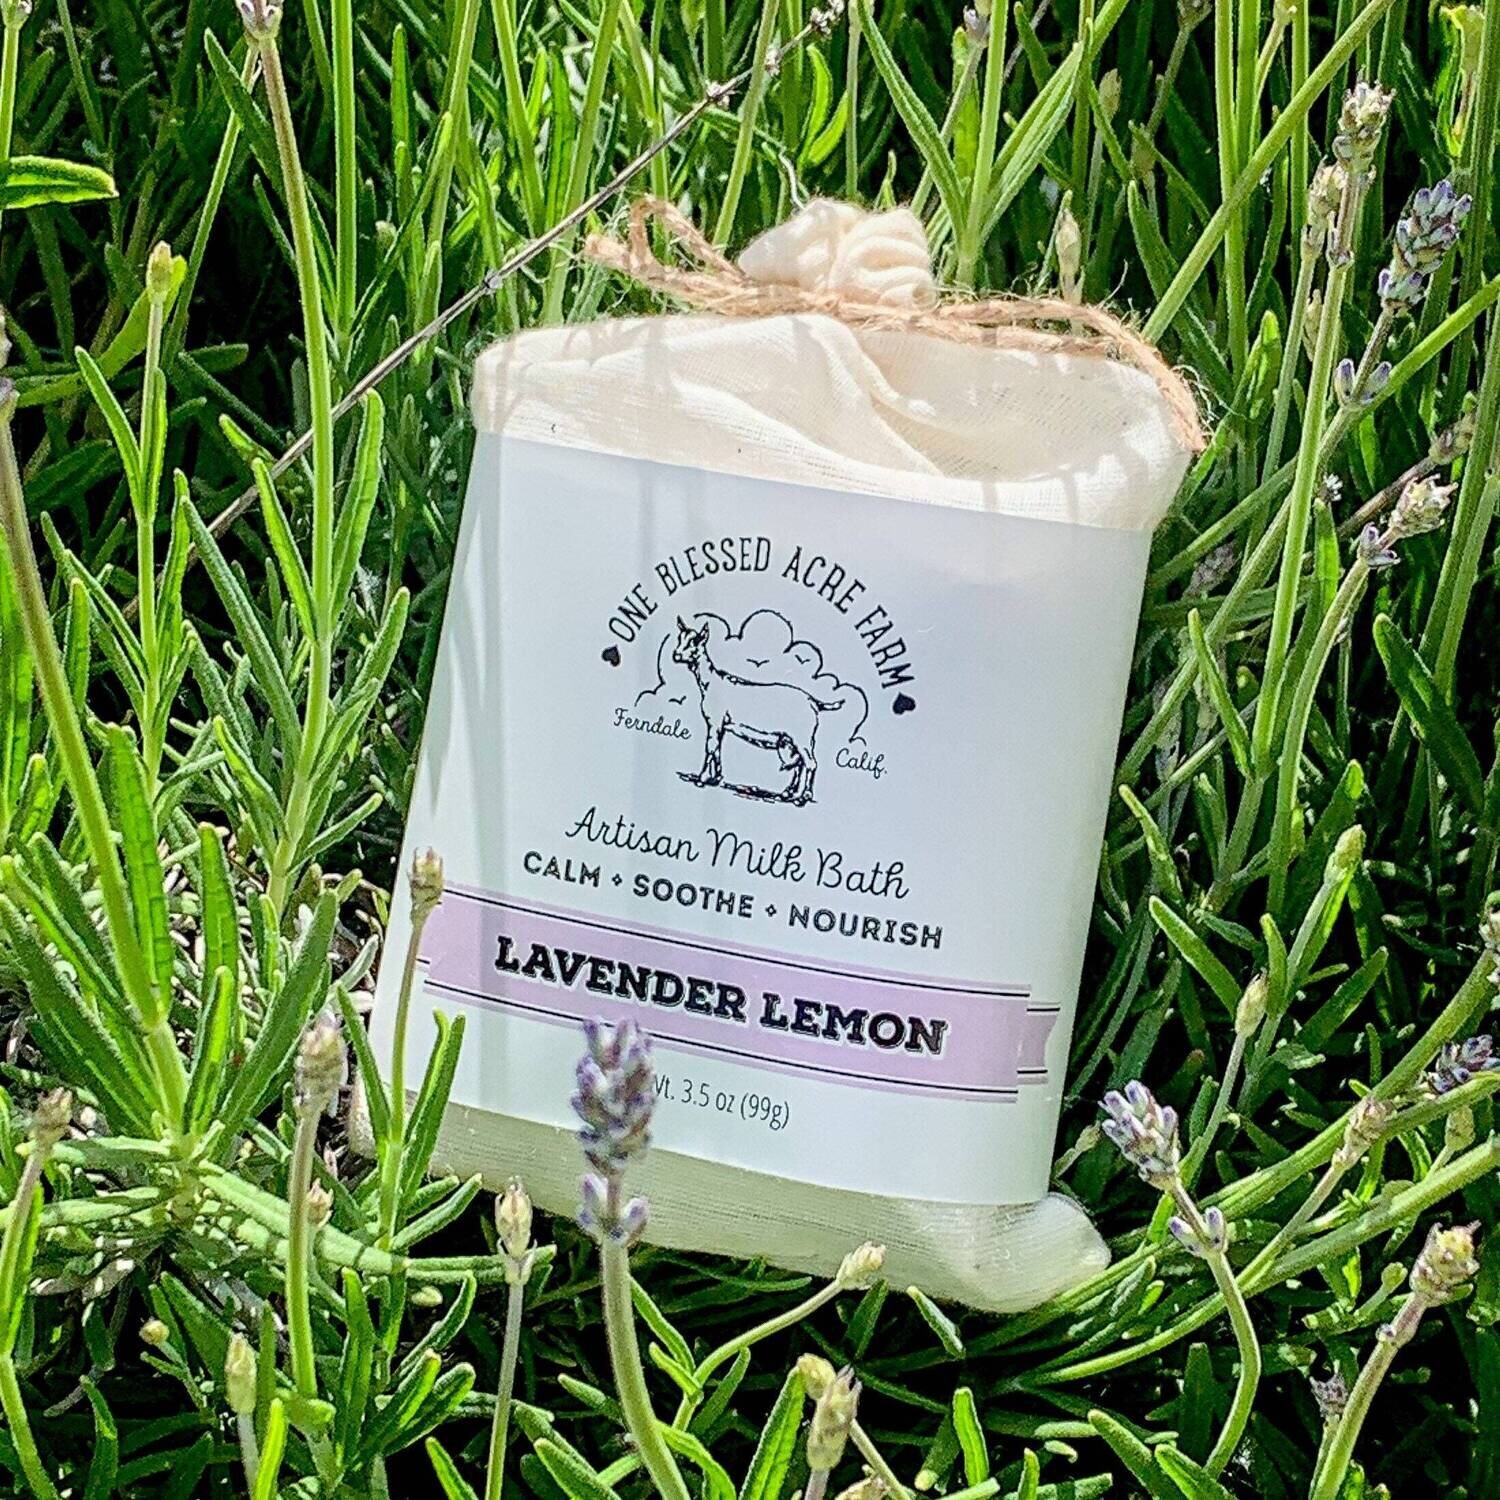 Lavender Lemon Artisan Milk Bath, Moisturizing & Handmade organic herbal bath soak in a bag